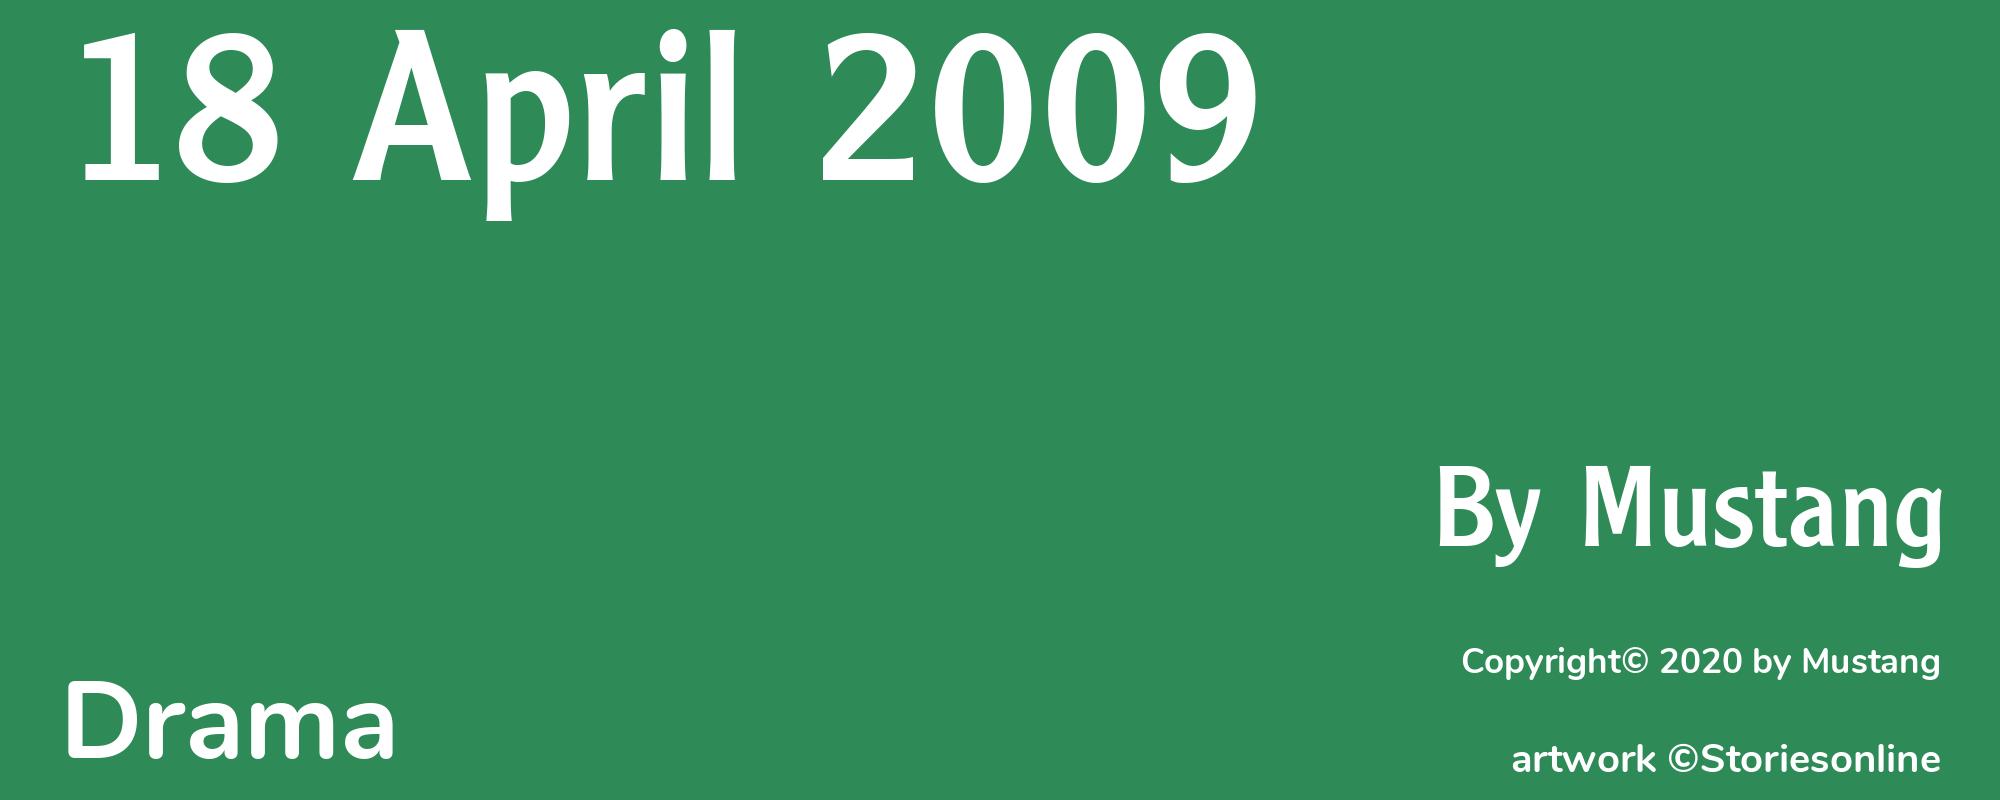 18 April 2009 - Cover